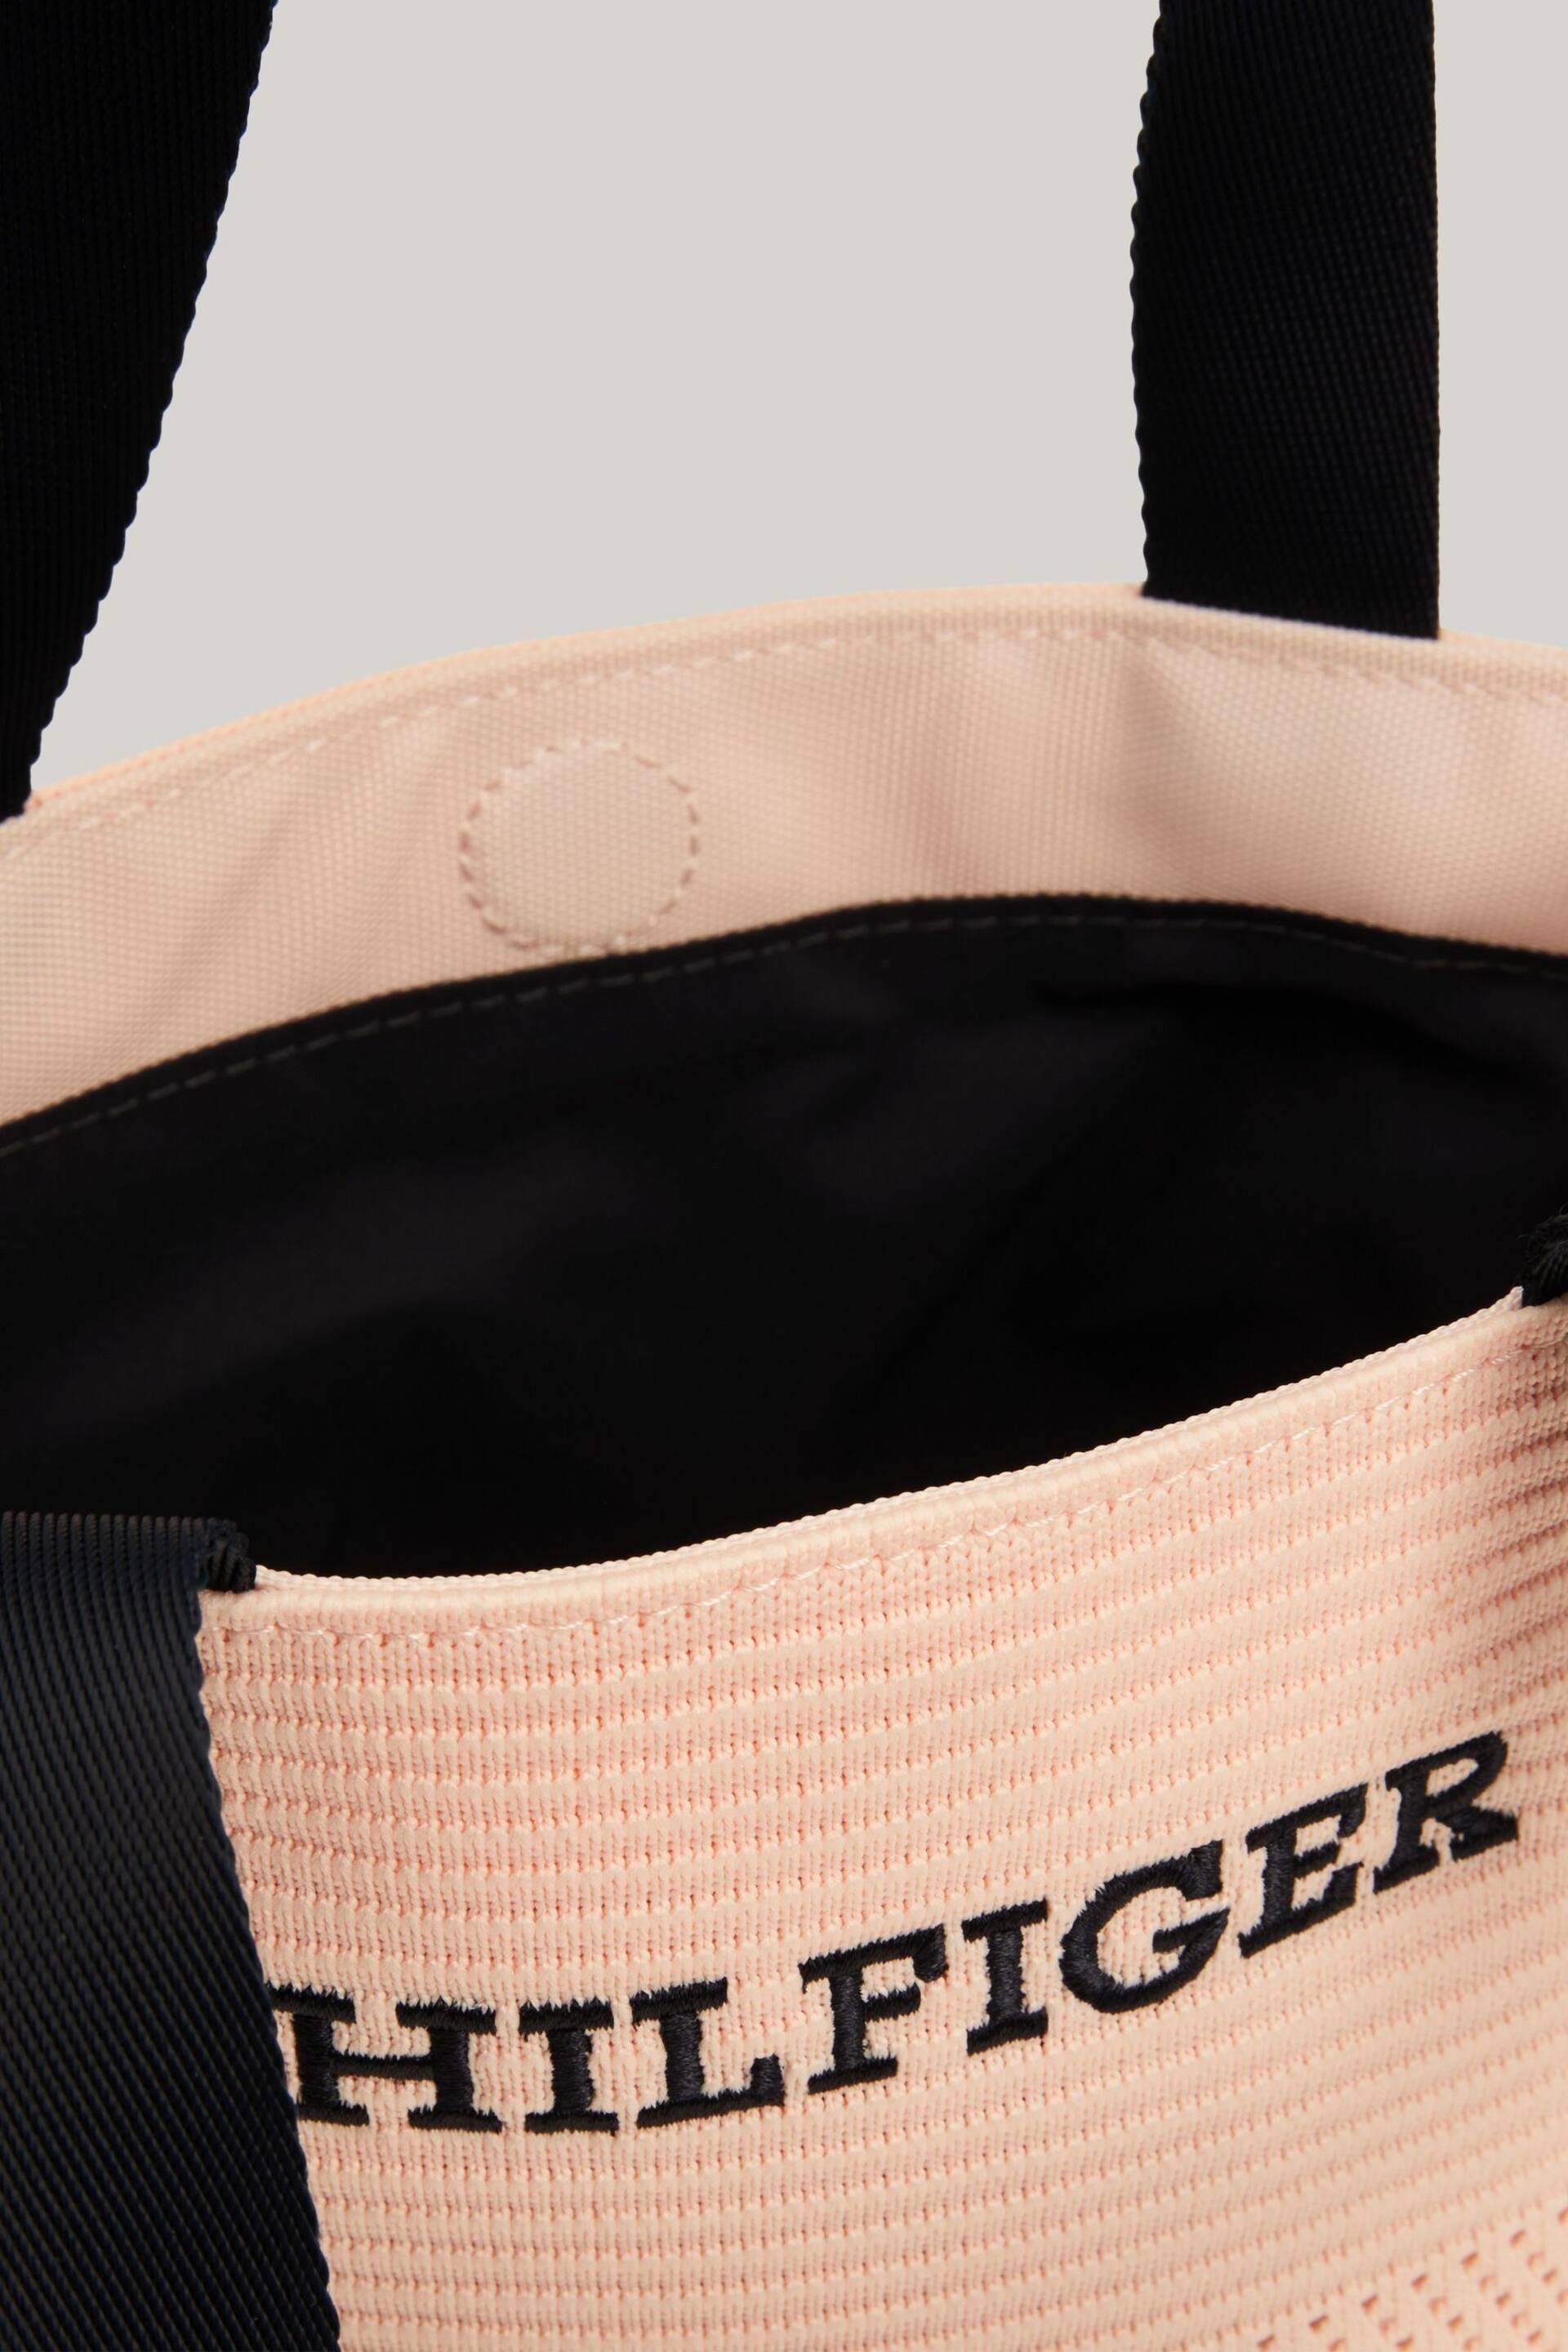 Tommy Hilfiger Pink Prep & Sport Beach Bag - Image 3 of 4